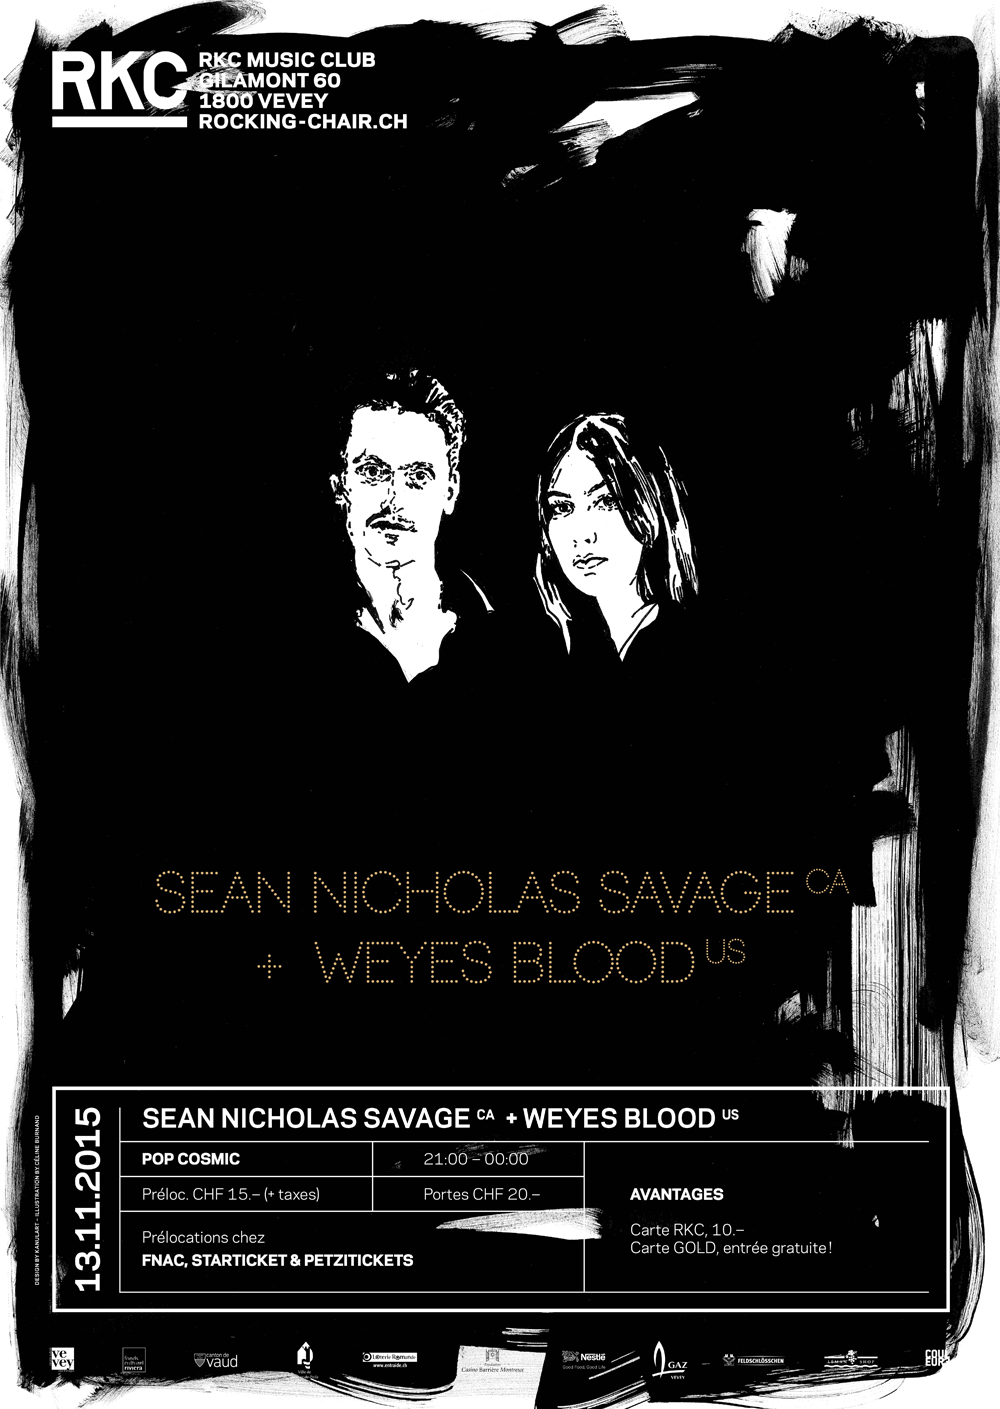 SEAN NICHOLAS SAVAGE (CA) + WEYES BLOOD (US) - Rocking Chair Vevey